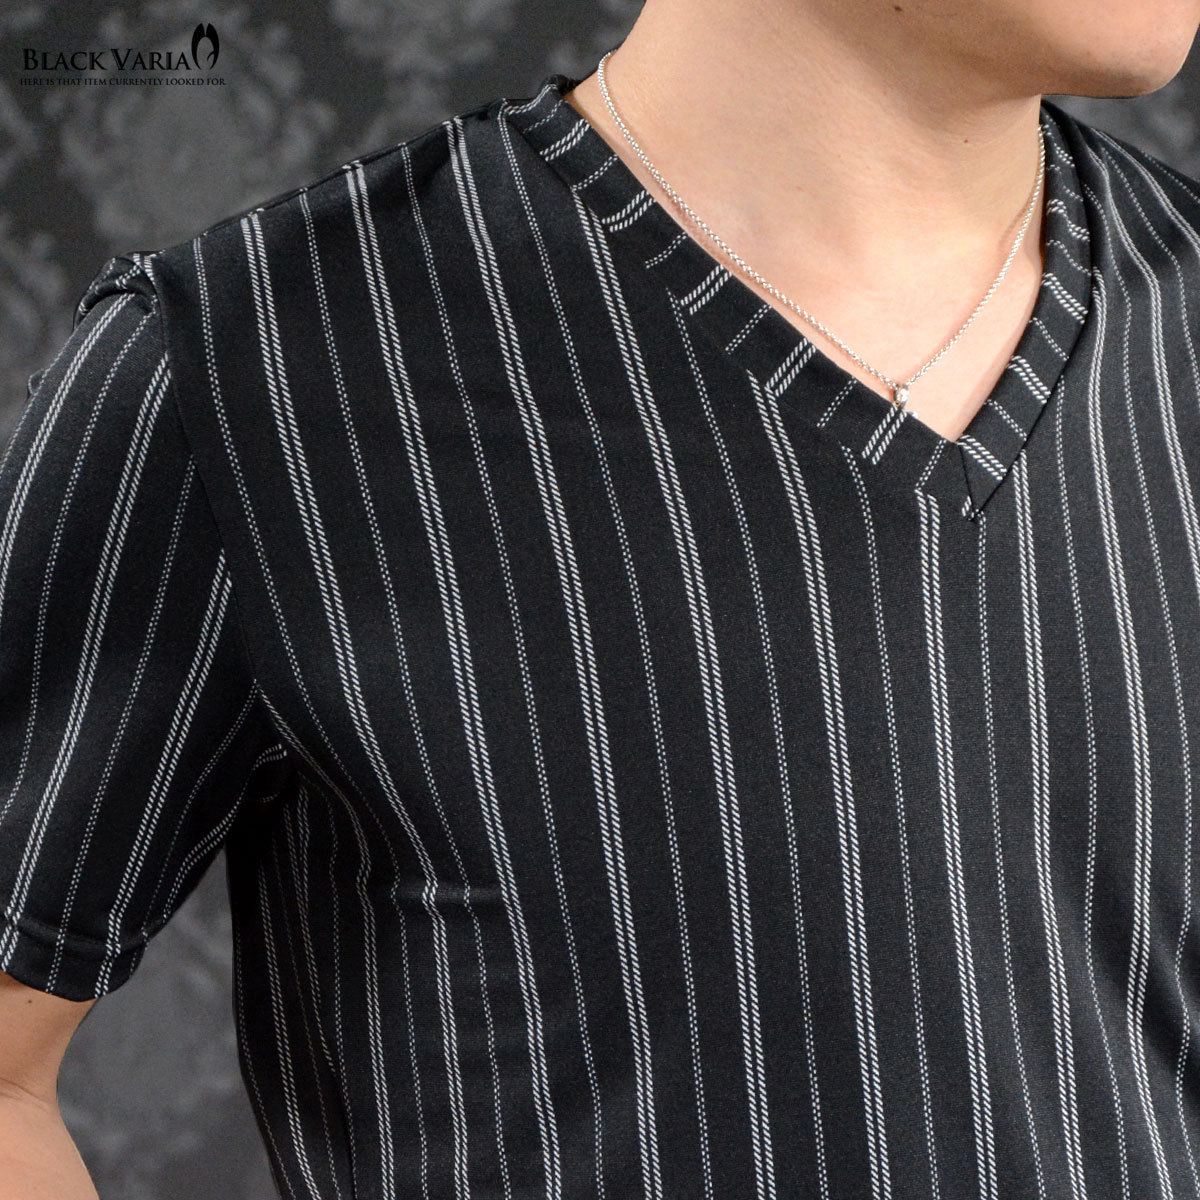 181302-bkwh ブラックバリア ストライプ ストレッチ 半袖 Vネック Tシャツ 日本製 細身 メンズ(ブラック黒ホワイト白) XL 総柄 スリム_画像5